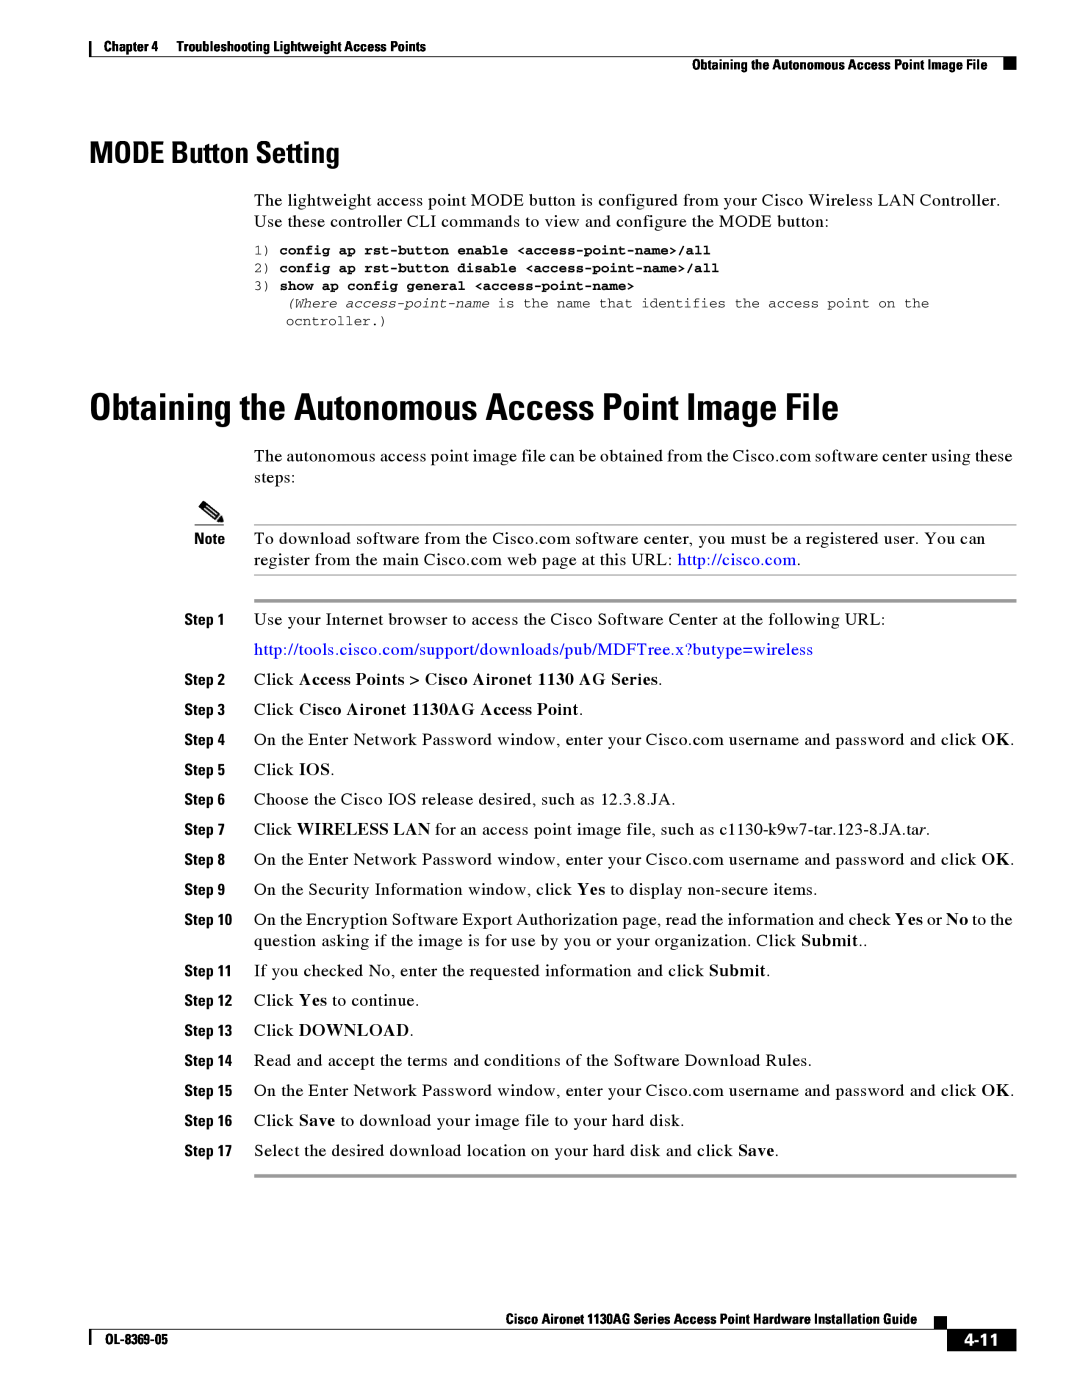 Cisco Systems 1130AG manual Obtaining the Autonomous Access Point Image File, MODE Button Setting, 4-11 